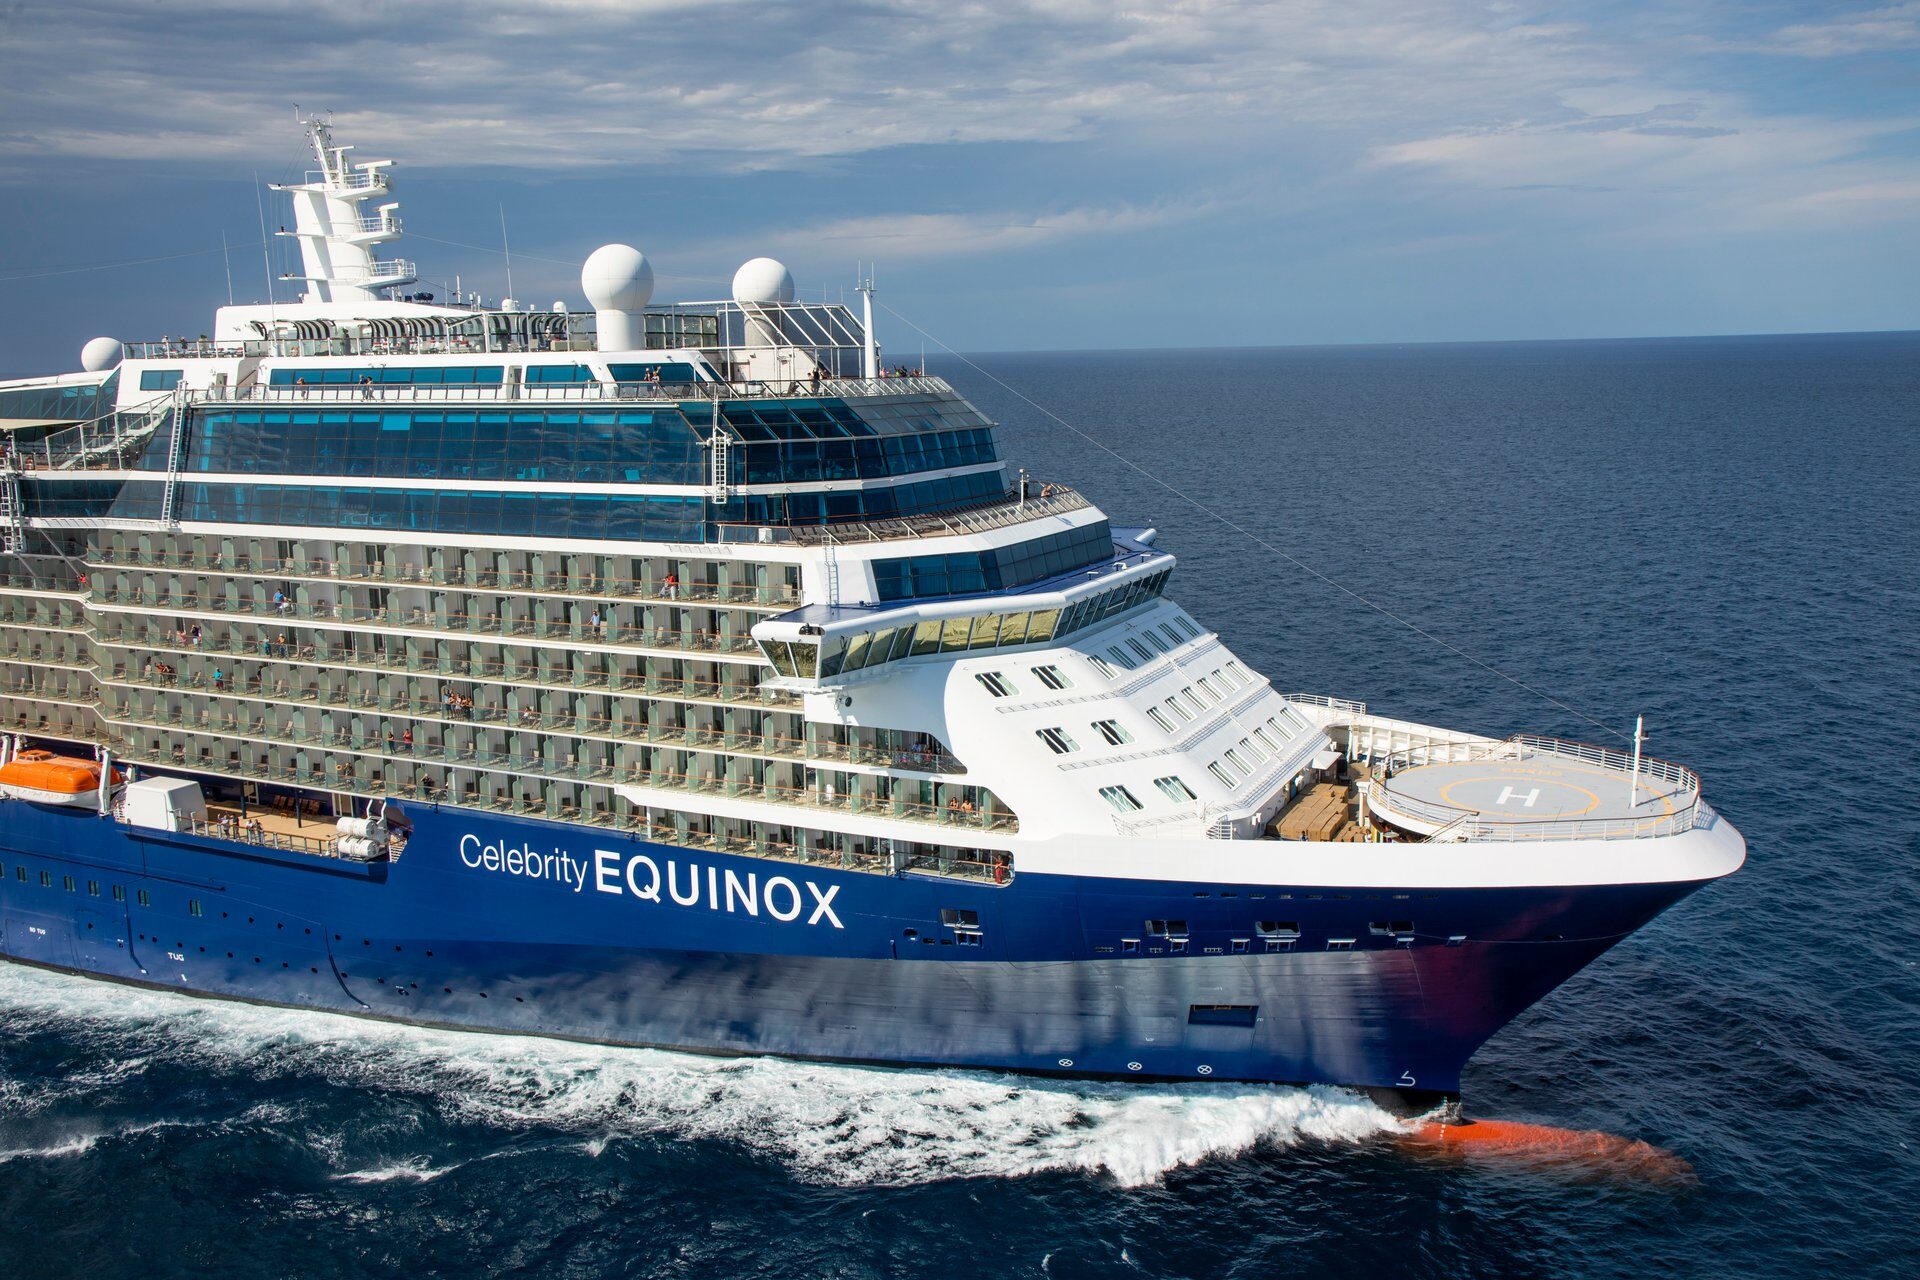 Celebrity Solstice Class Ships Celebrity Equinox 